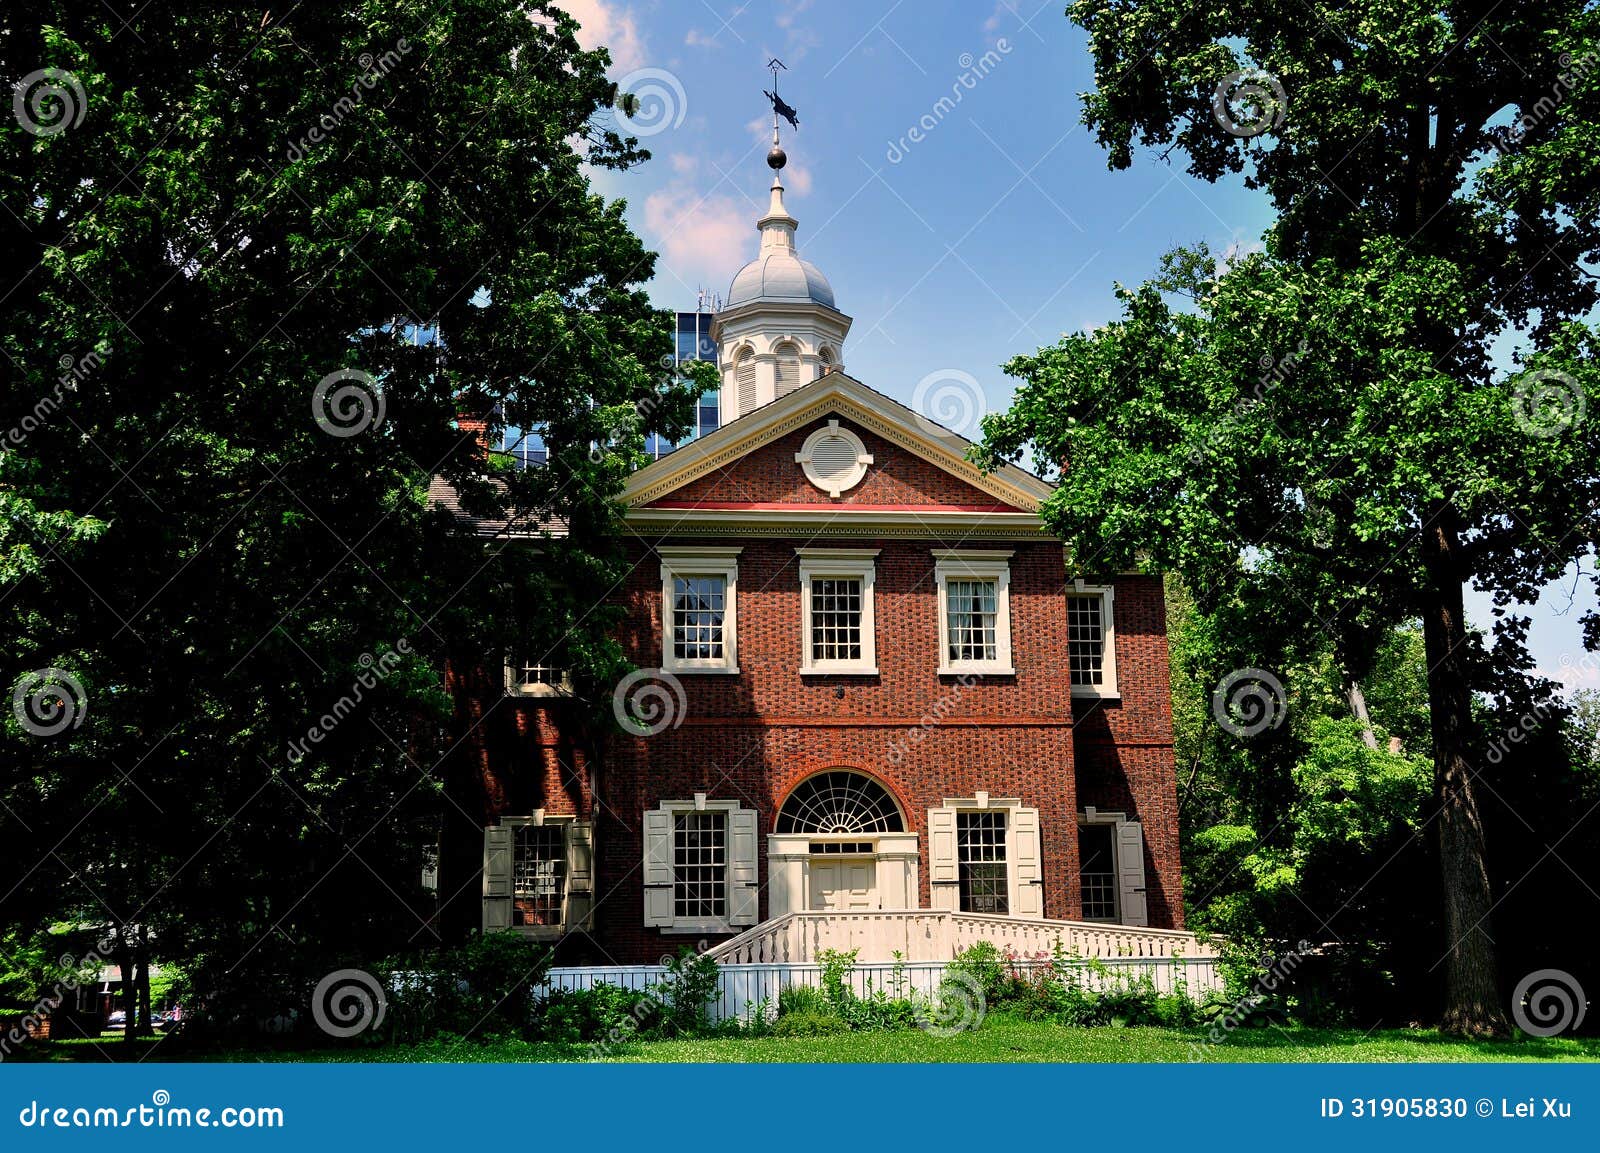 philadelphia, pa: historic 1774 carpenters' hall